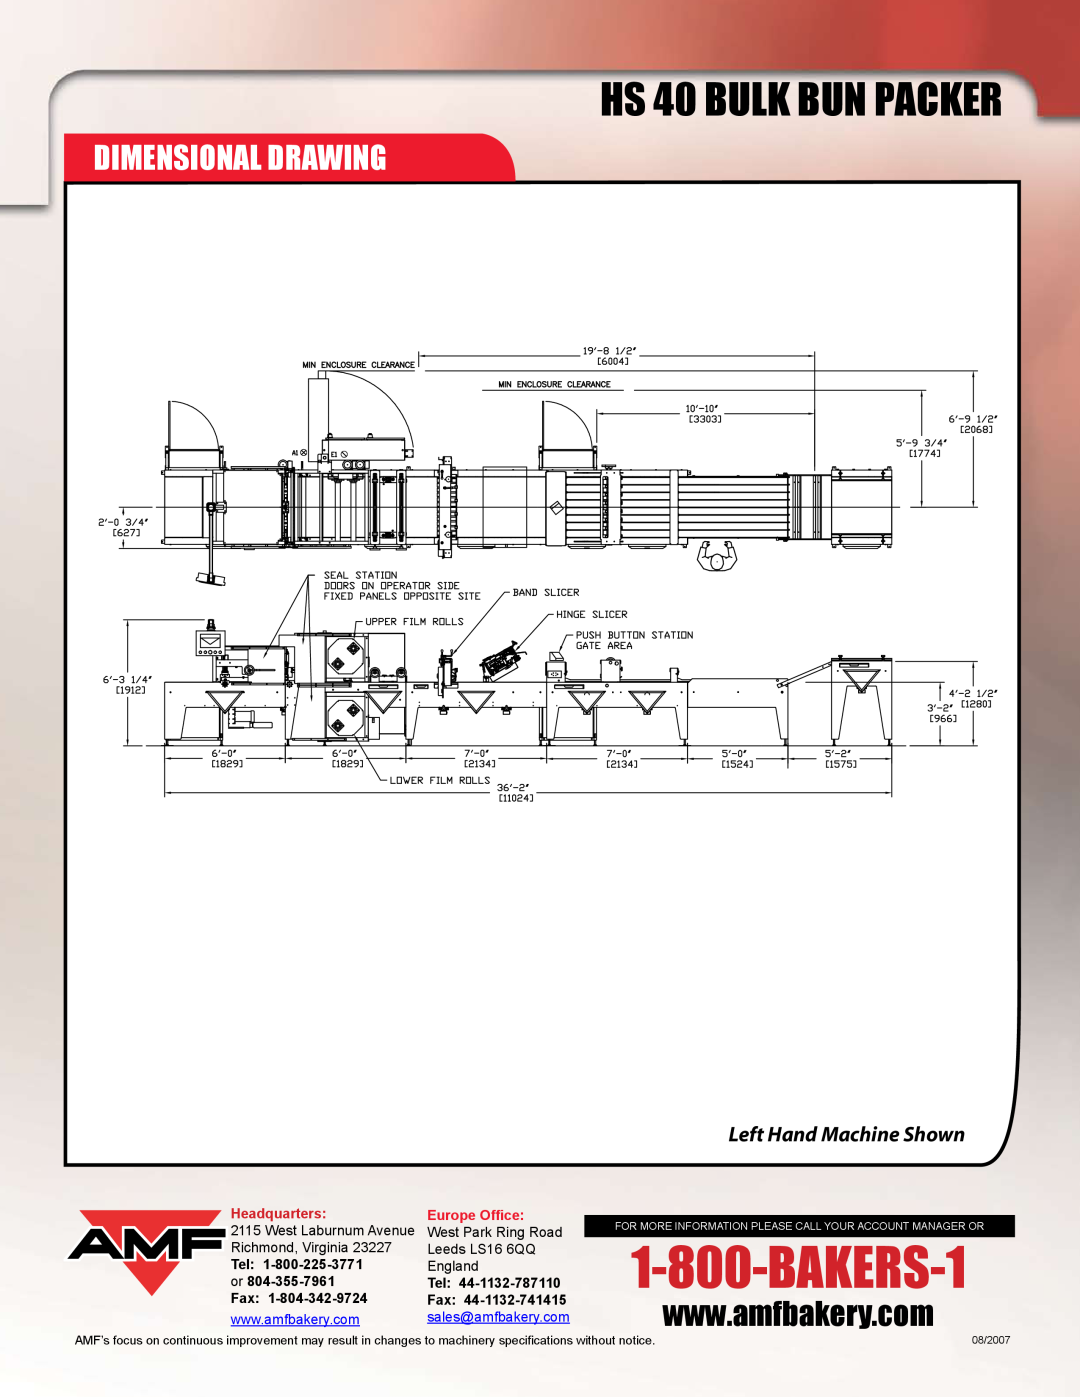 AMF manual Dimensional Drawing, HS 40 BULK BUN PACKER, Left Hand Machine Shown, Headquarters, Europe Office 